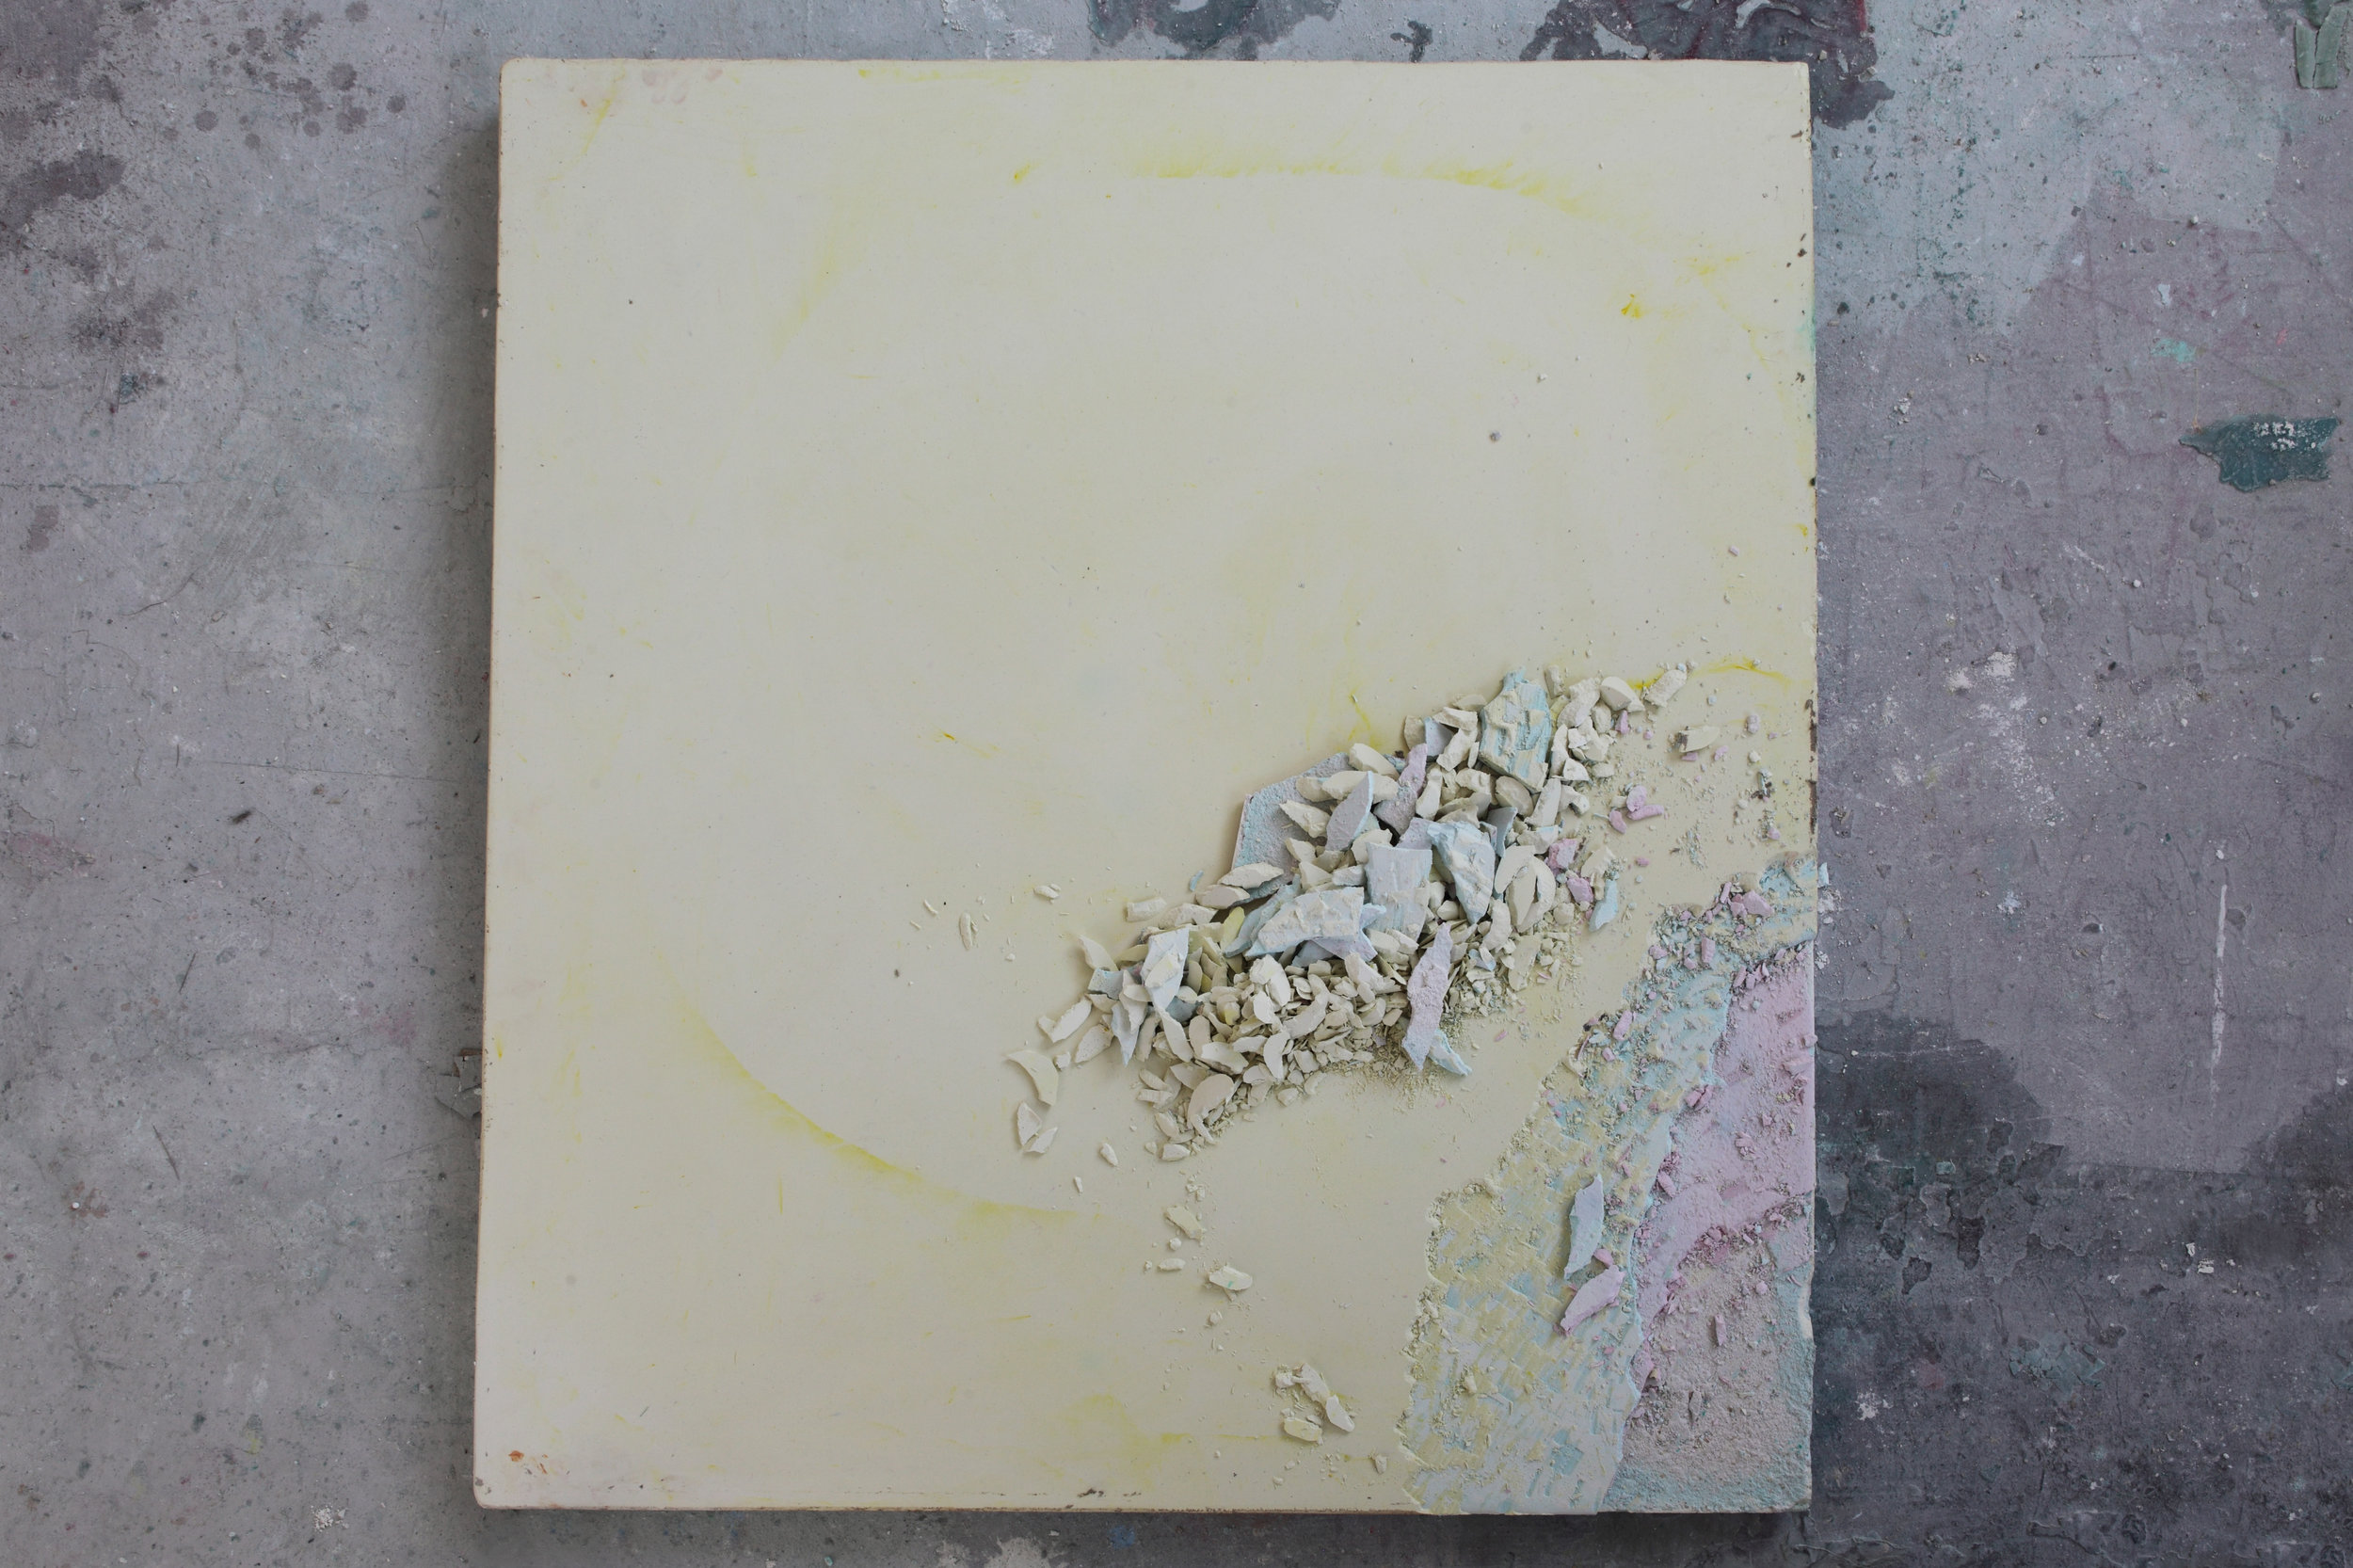 Studio View 2014: Chalk no. 4 - Colored chalk, 100 x 100 cm, Maastricht, 2014